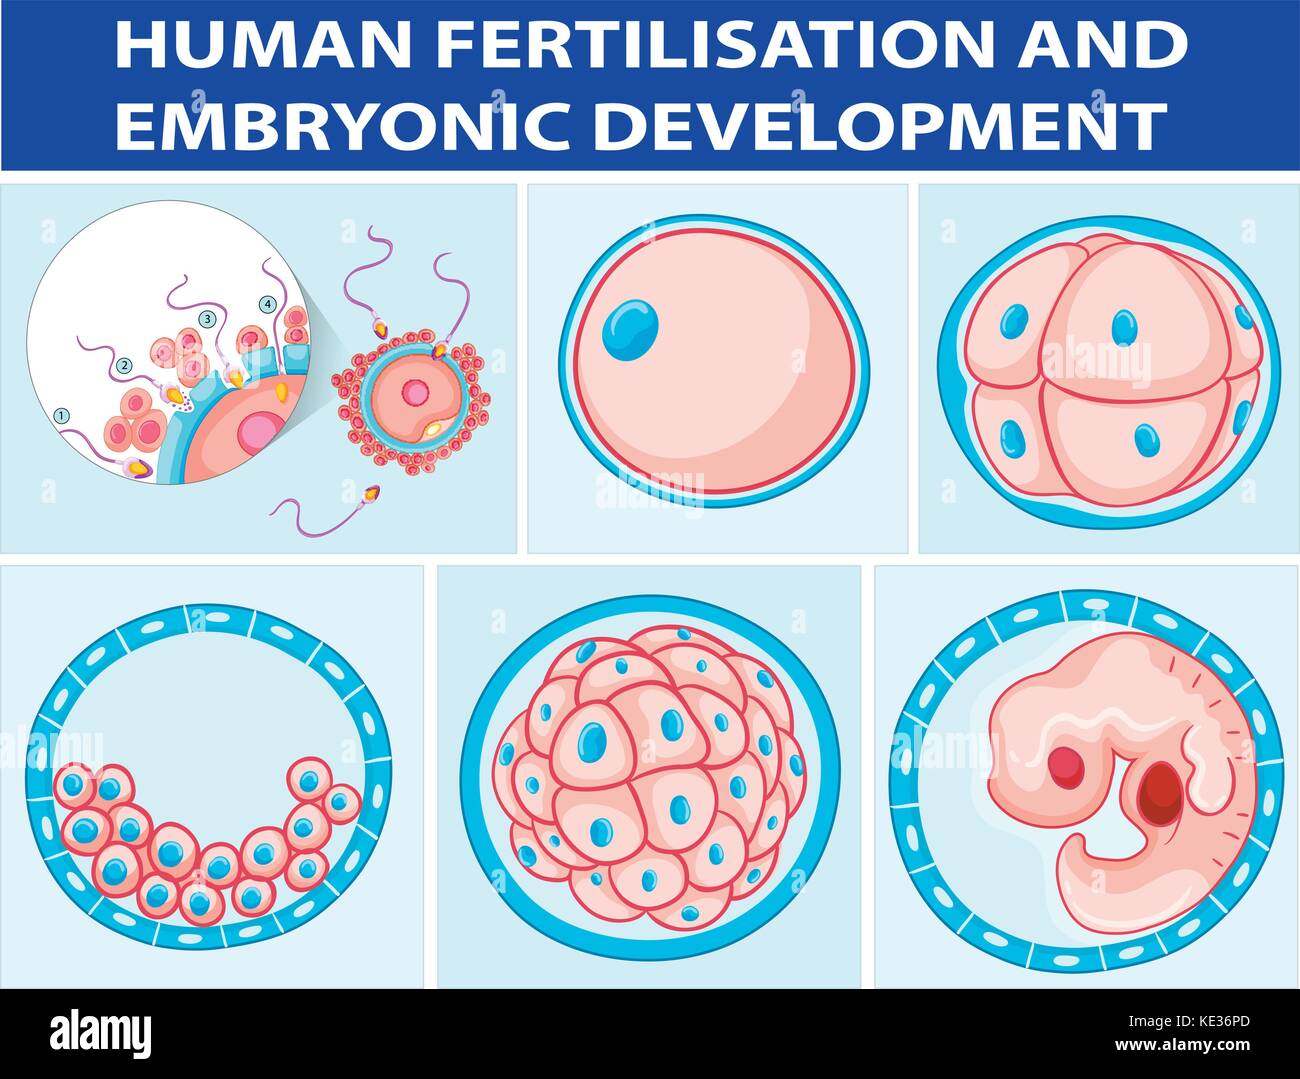 Diagram Showing Human Fertilisation And Embryonic Development Illustration Stock Vector Image